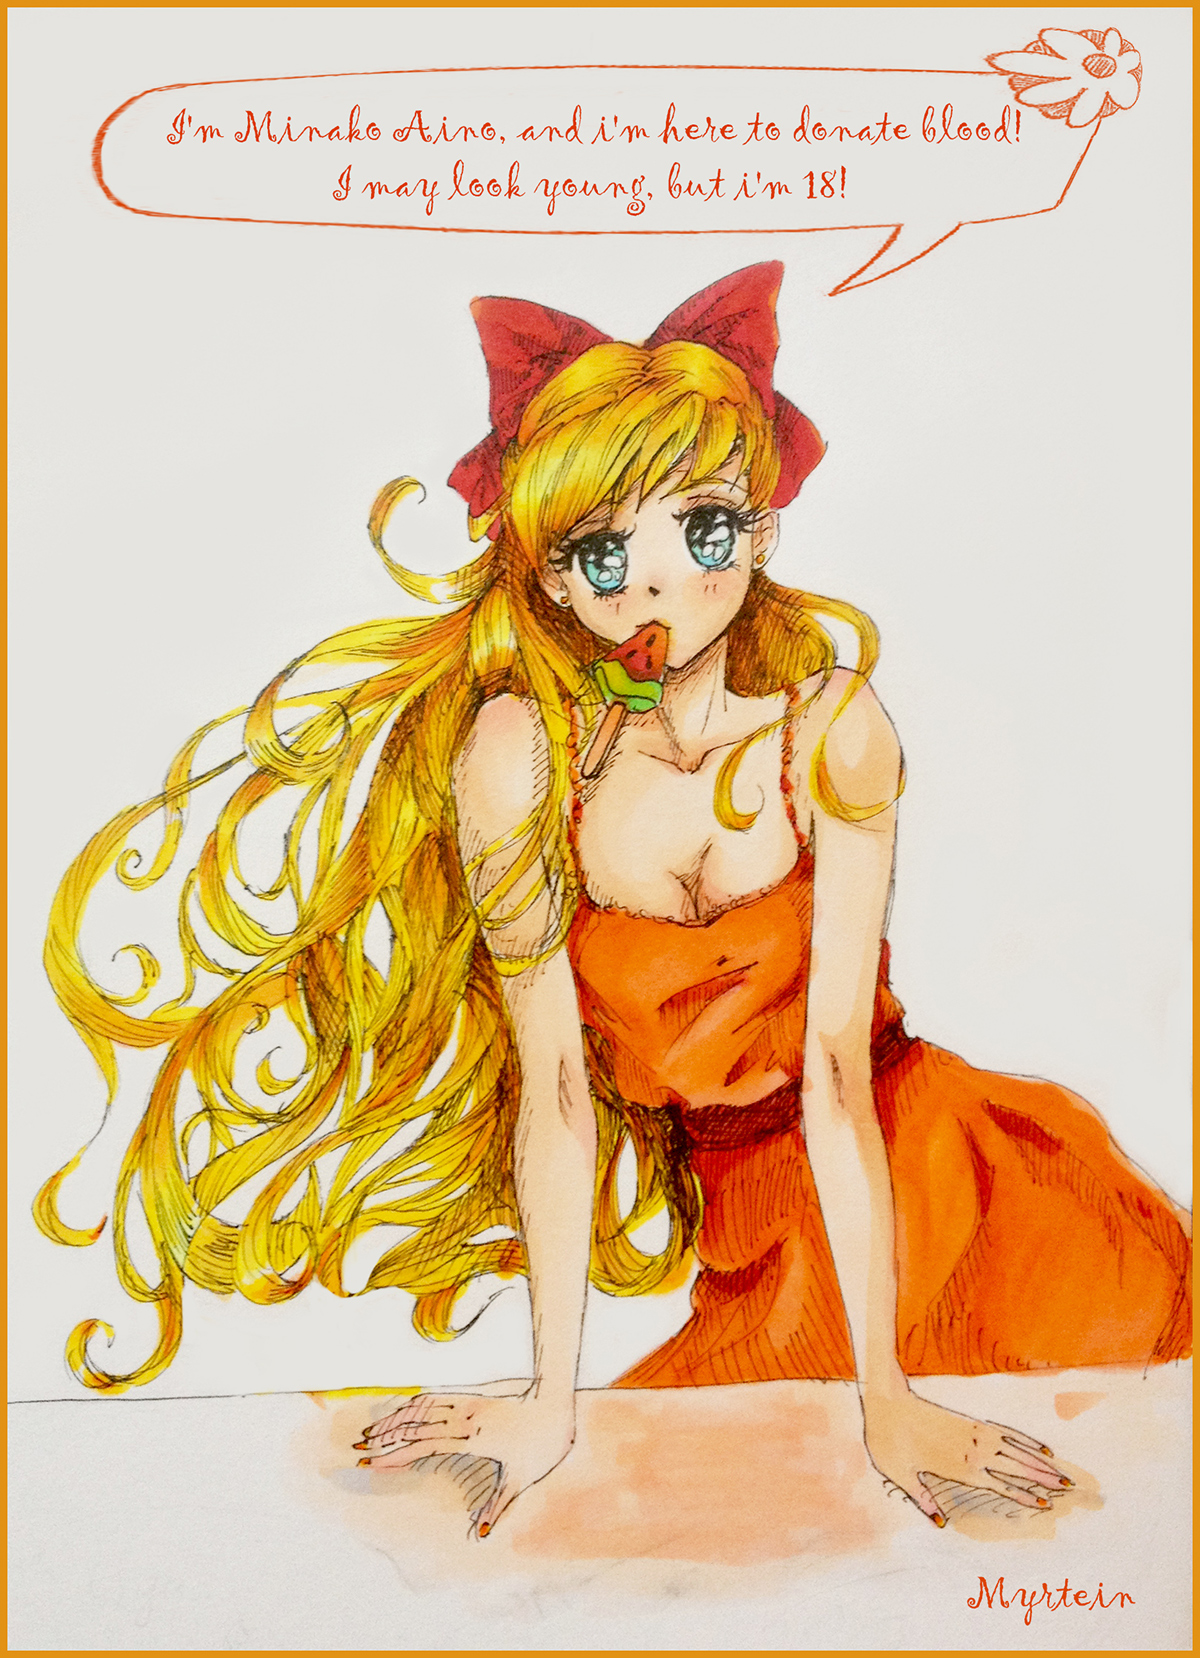 sailor moon girl anime cartoon humor fanart venus Sailor Venus minako cute